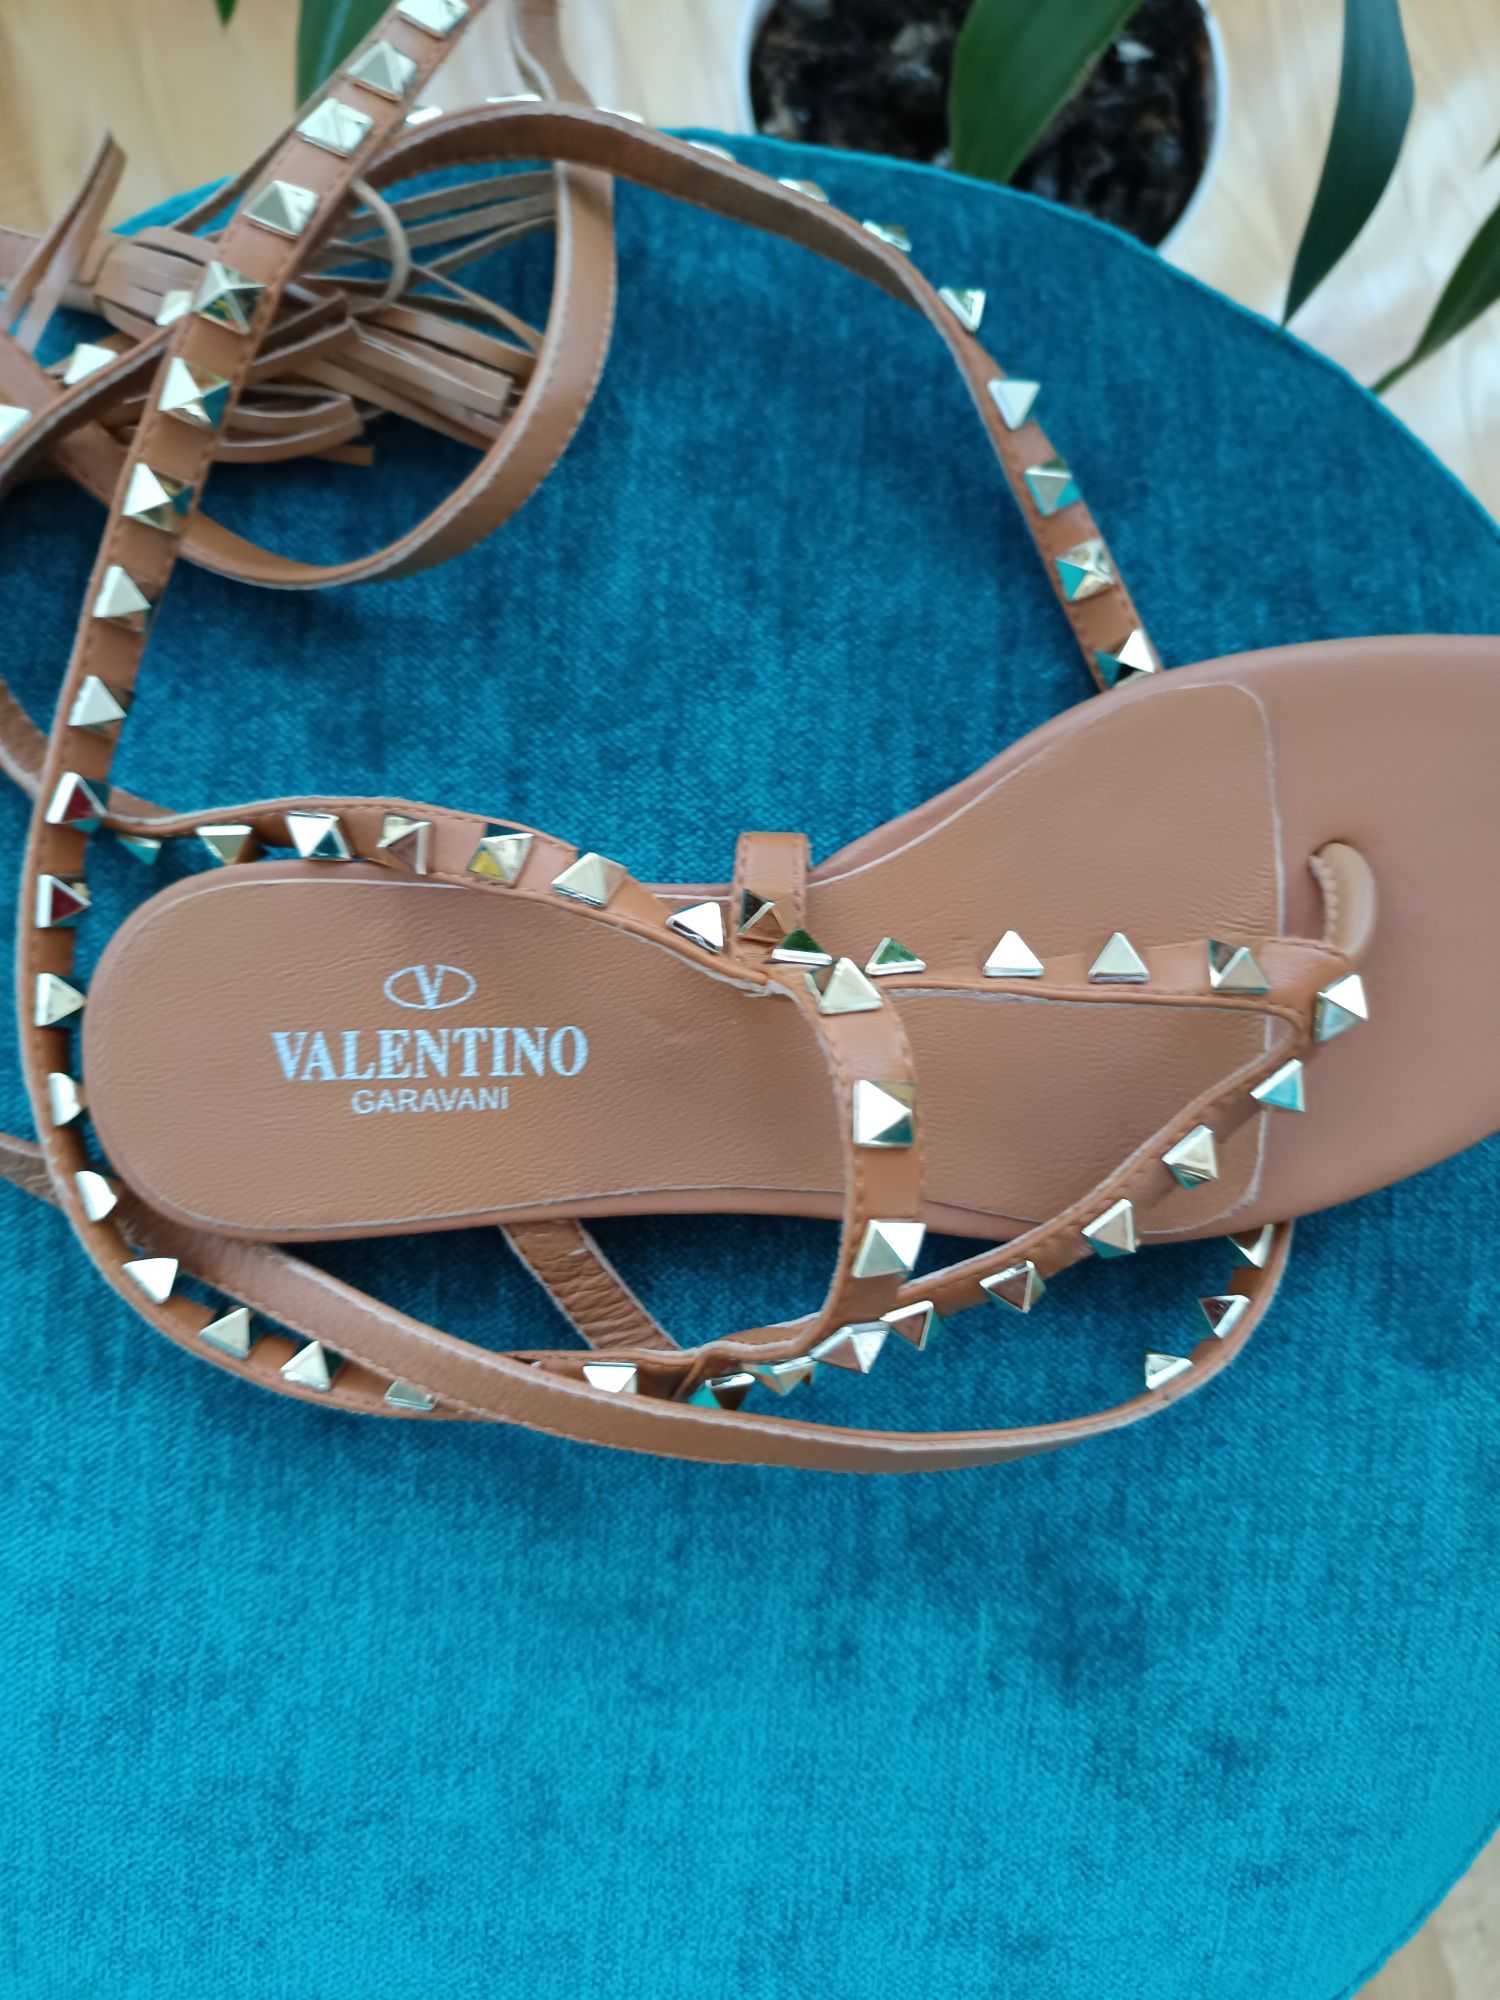 Vând sandale Valentino Garavani